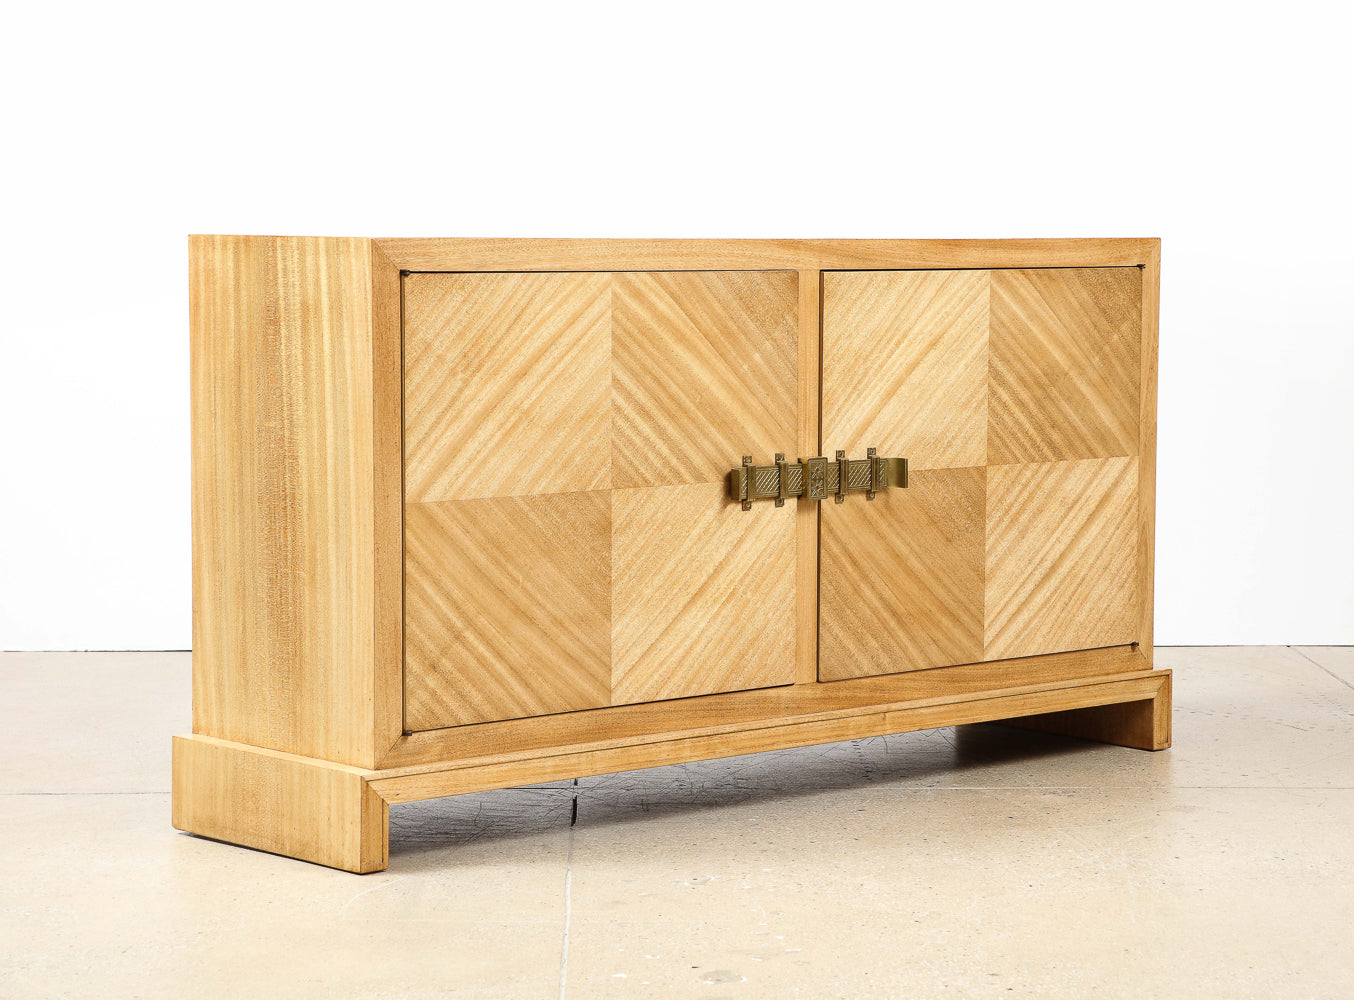 2 Door Cabinet by Tommi Parzinger for Charak Modern